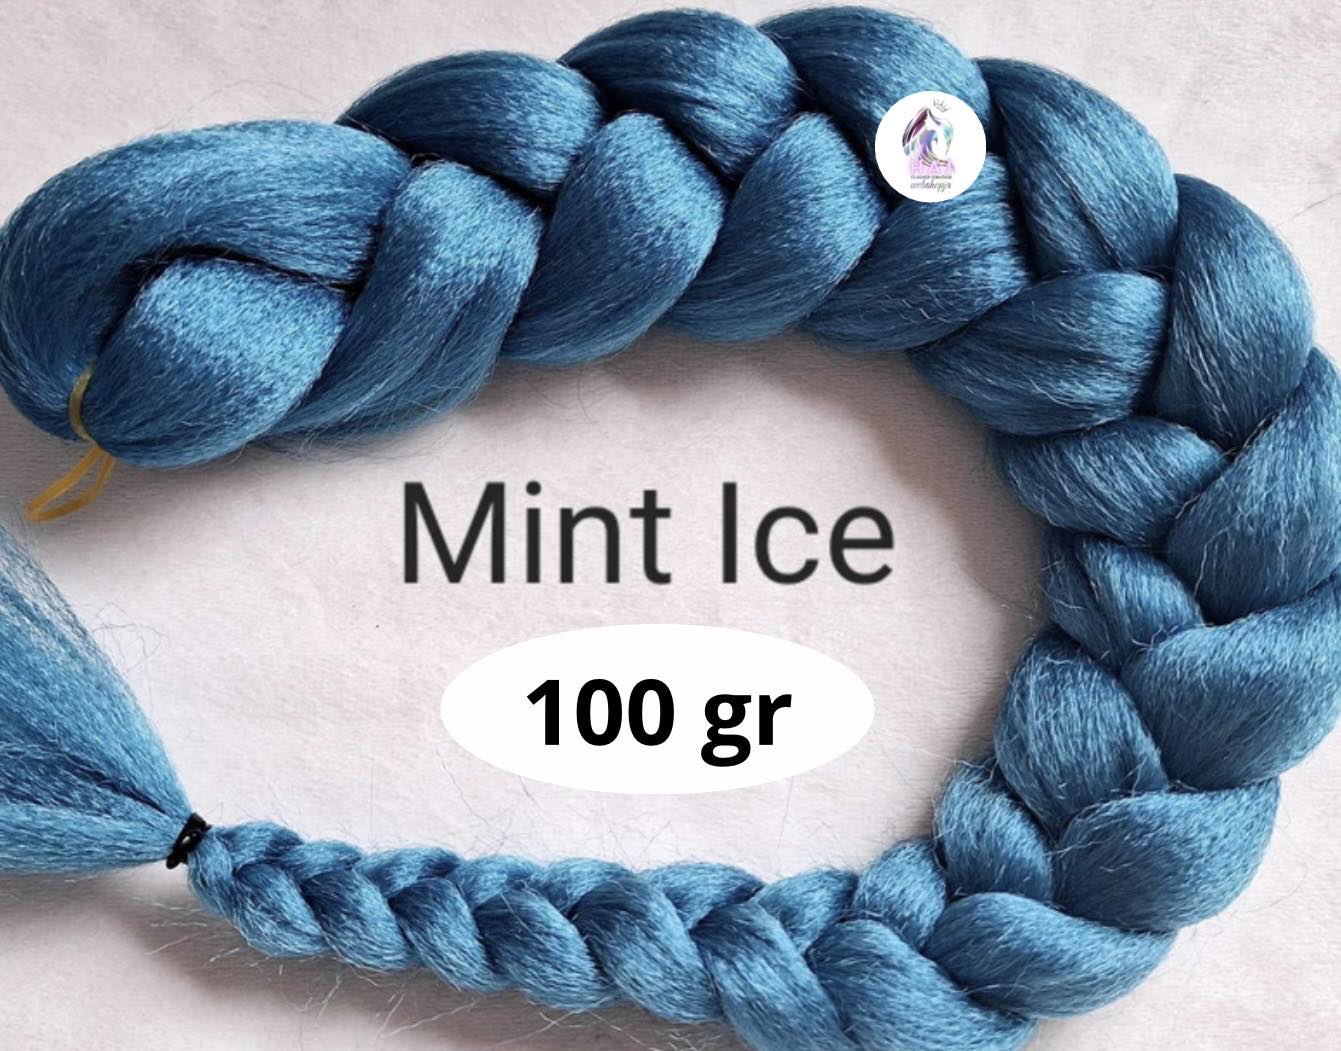 Mint Ice 100 gr - 1.700 Ft